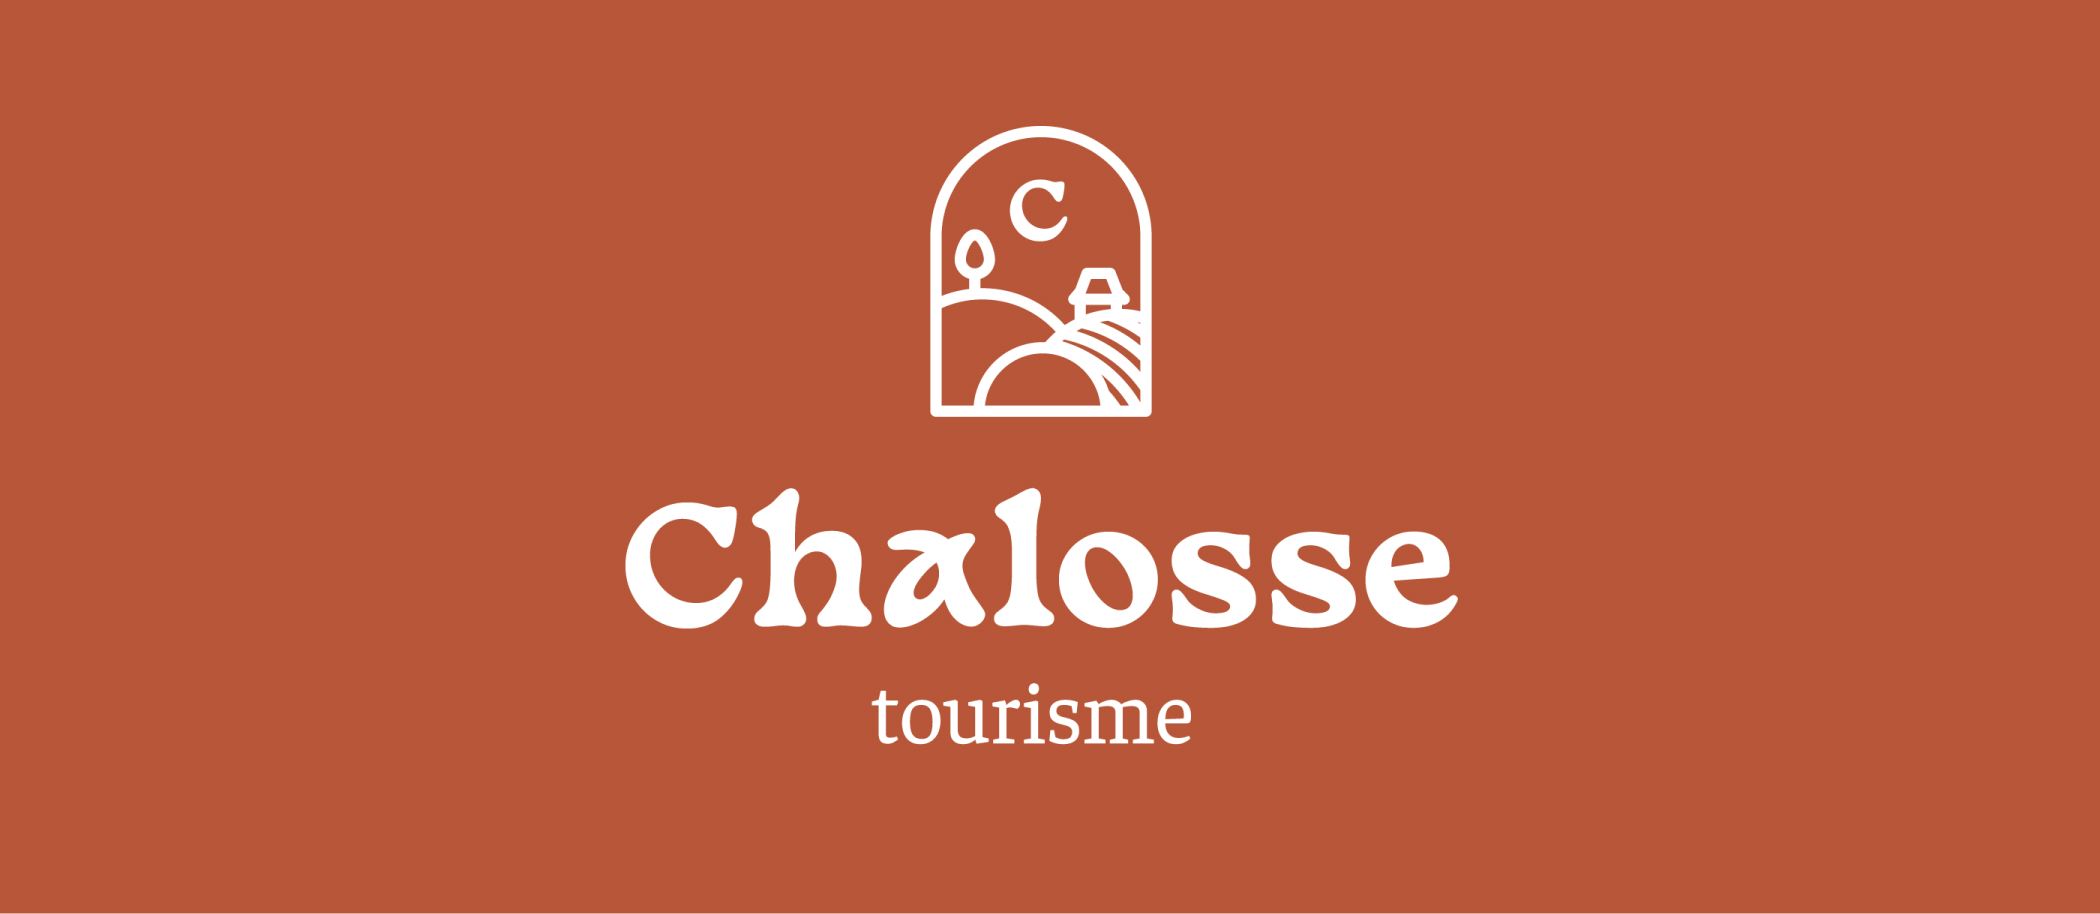 Chalosse-Début